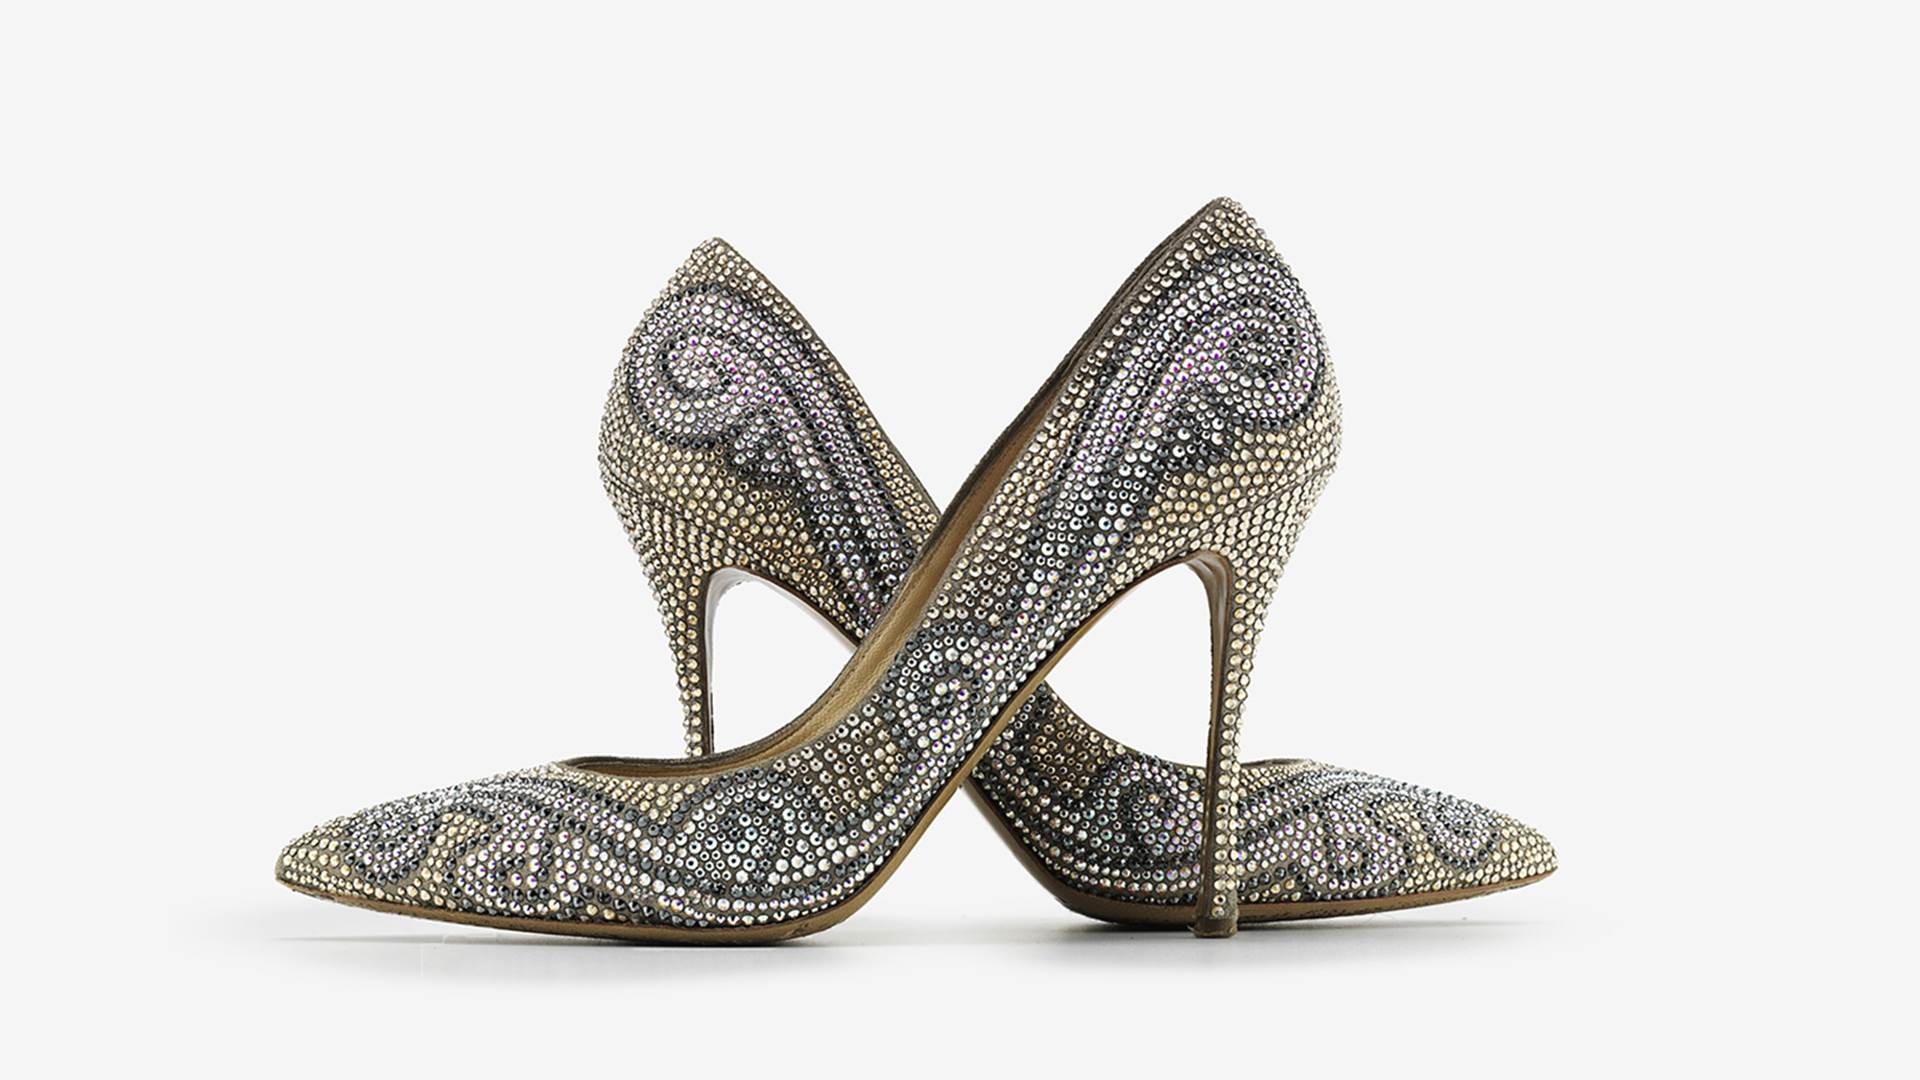 1920x1080 'Killer Heels': The art of the high-heeled shoe